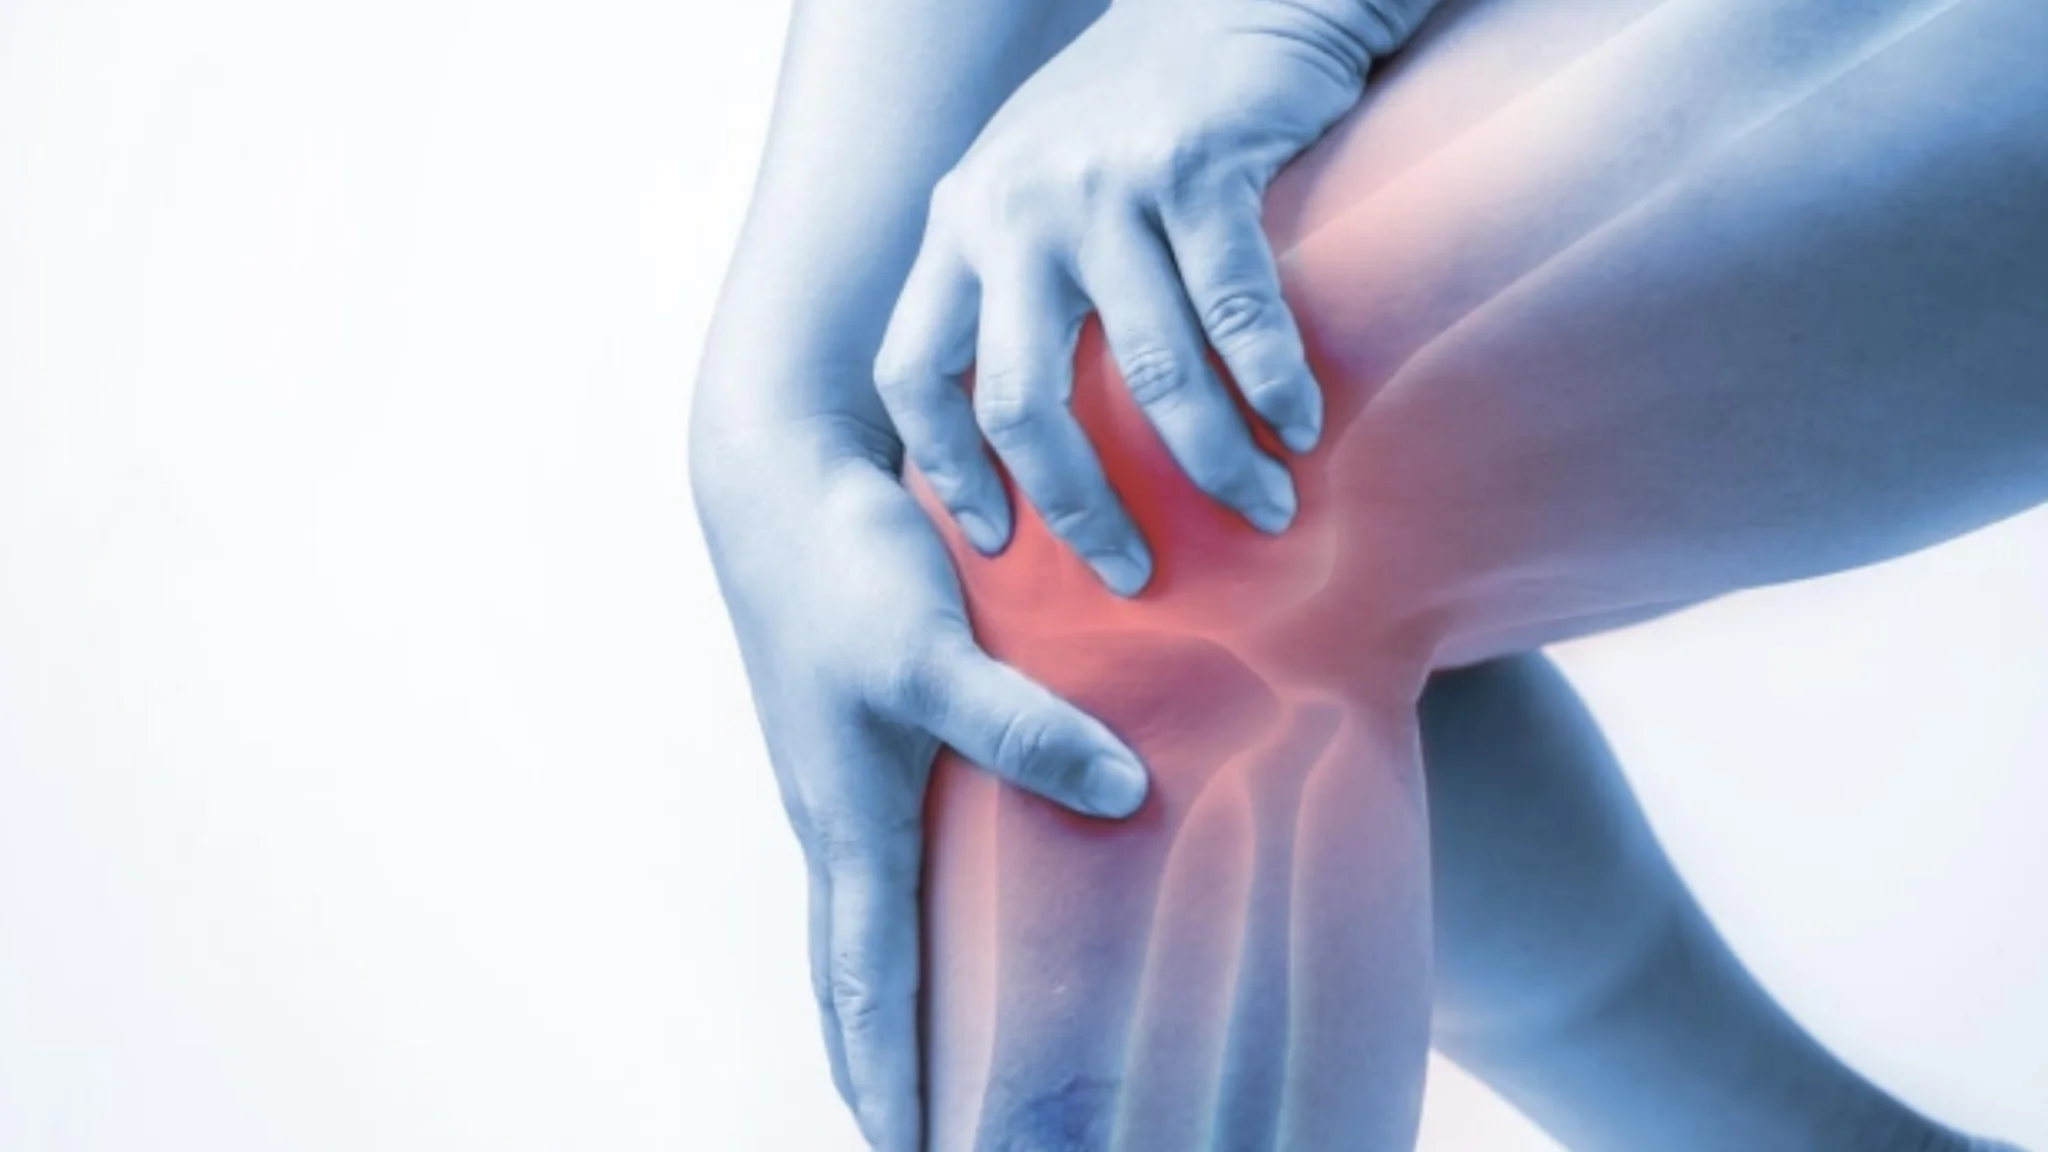 knee pain treatment in Udaipur, ayurvedic treatment for knee pain in Udaipur